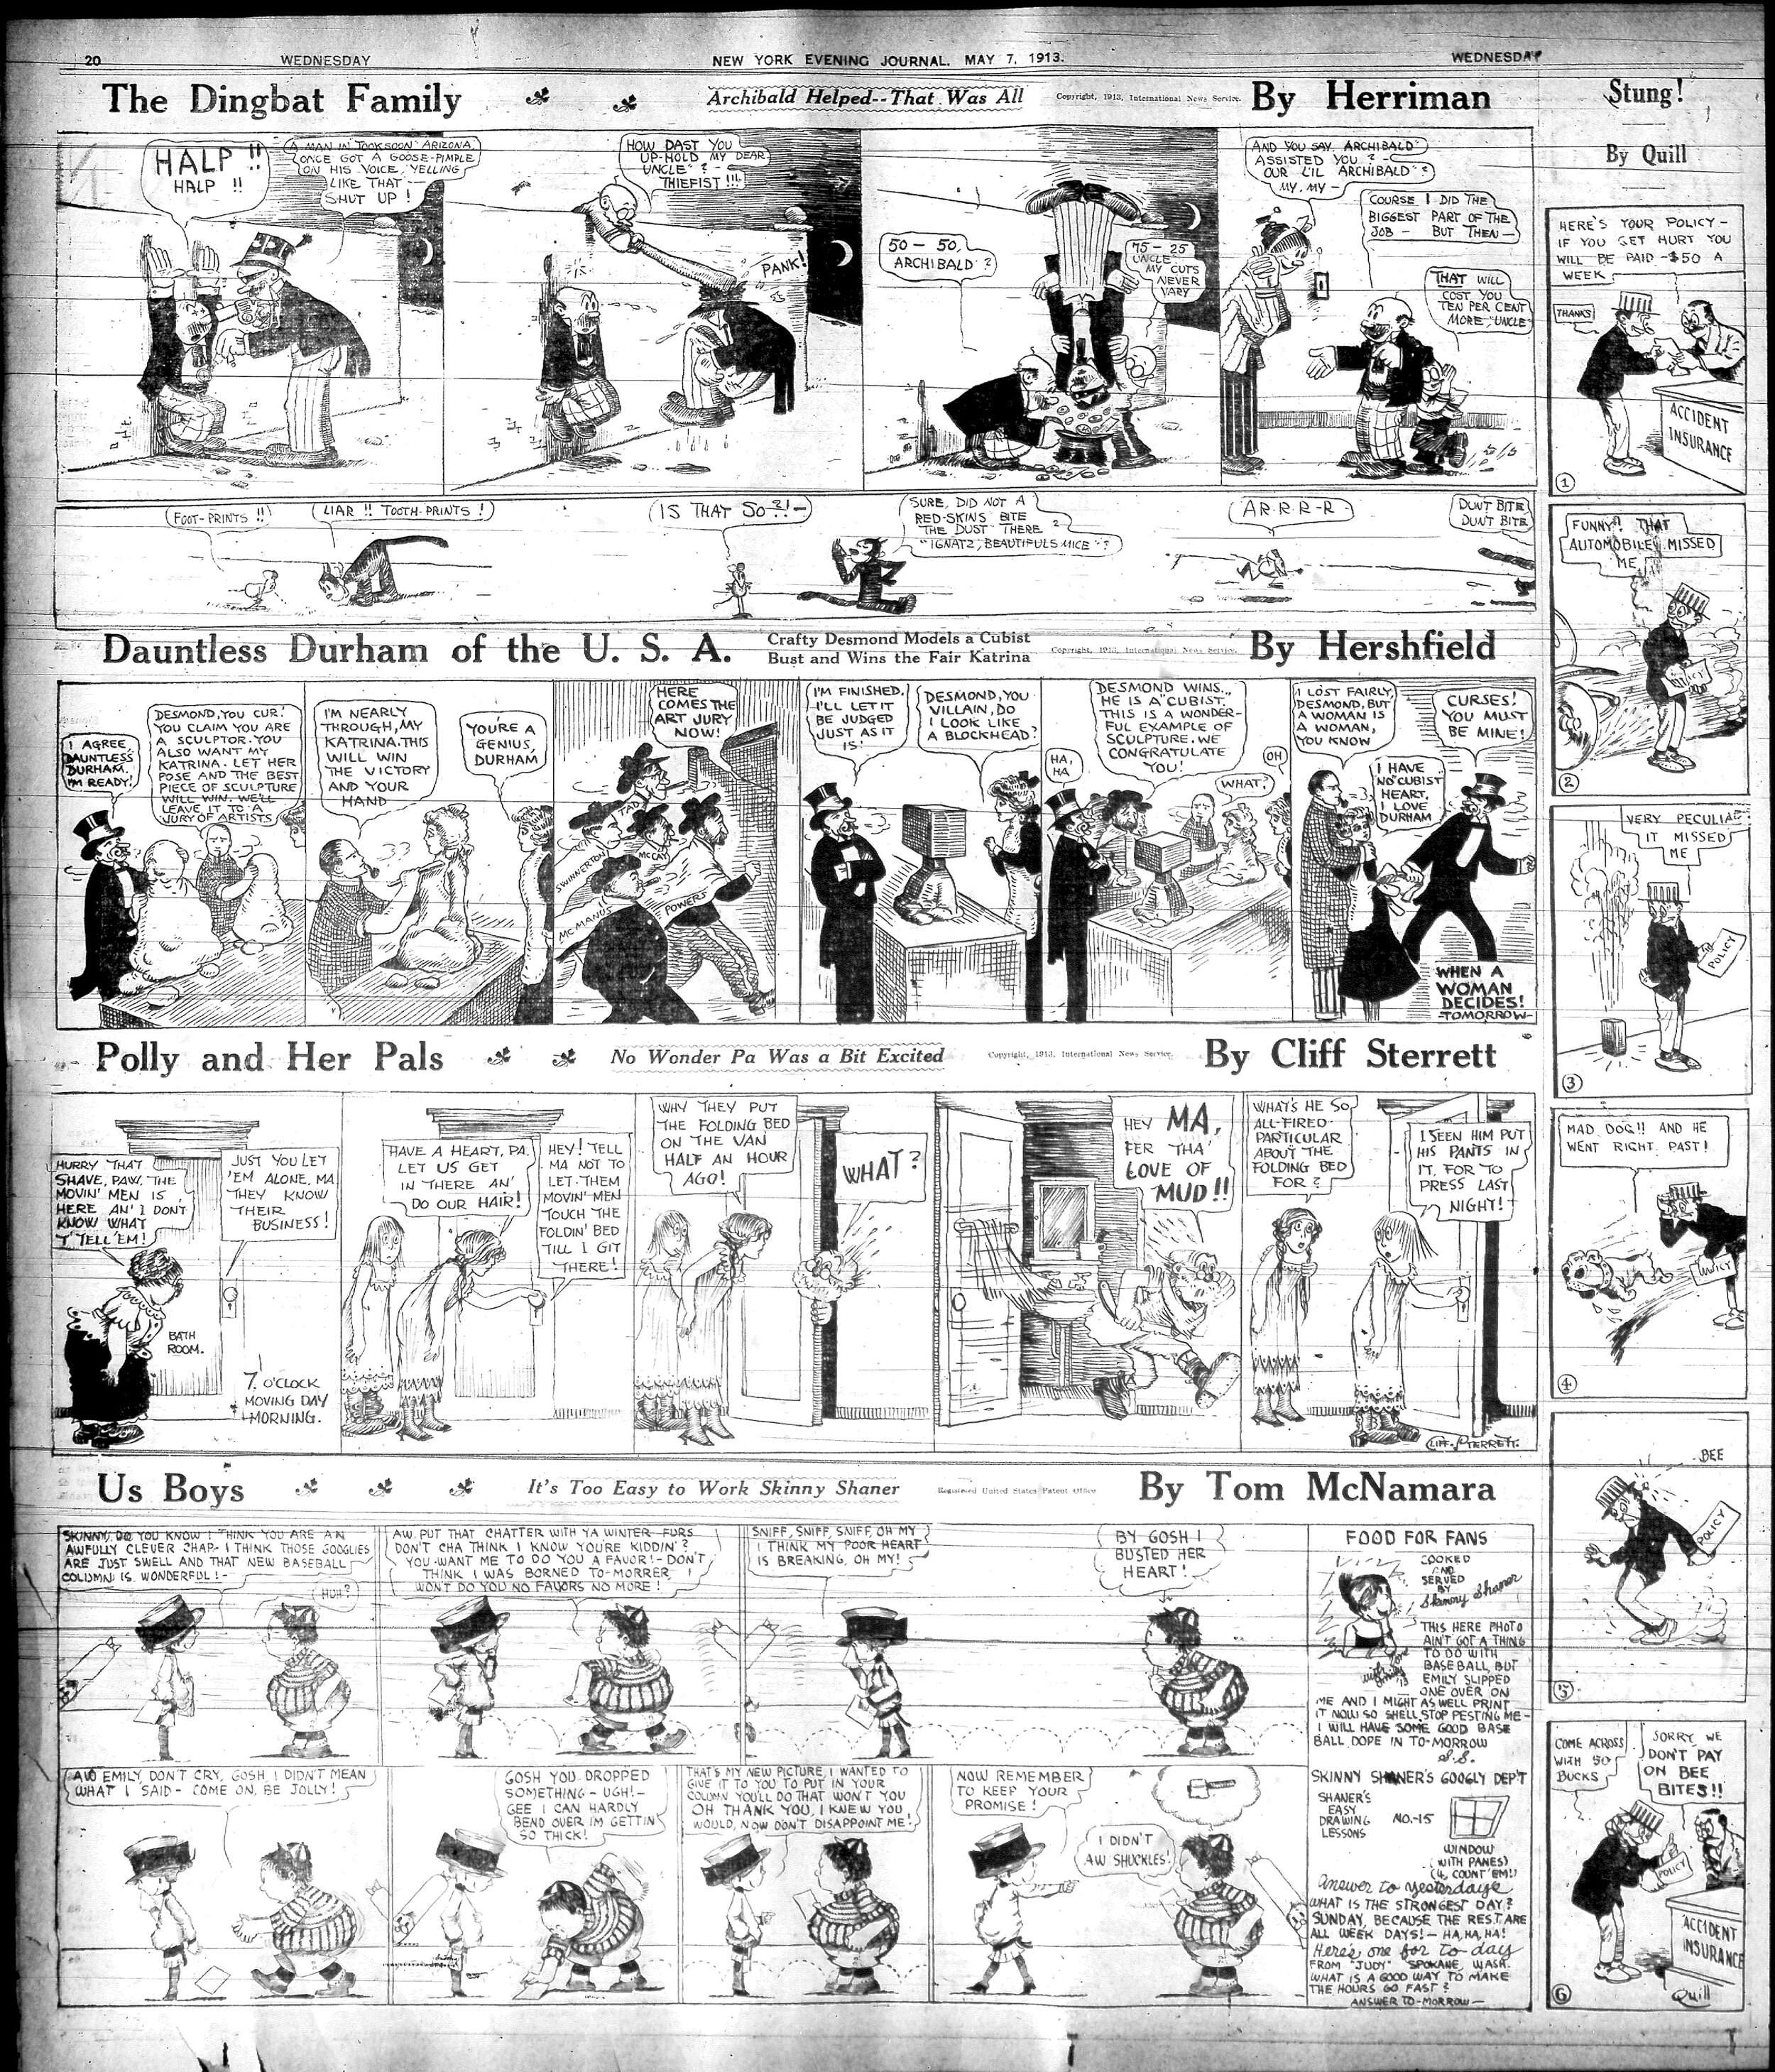 13-nyej-05-7-1913-comics-page-with-hershfield-cubism-gag-.jpg